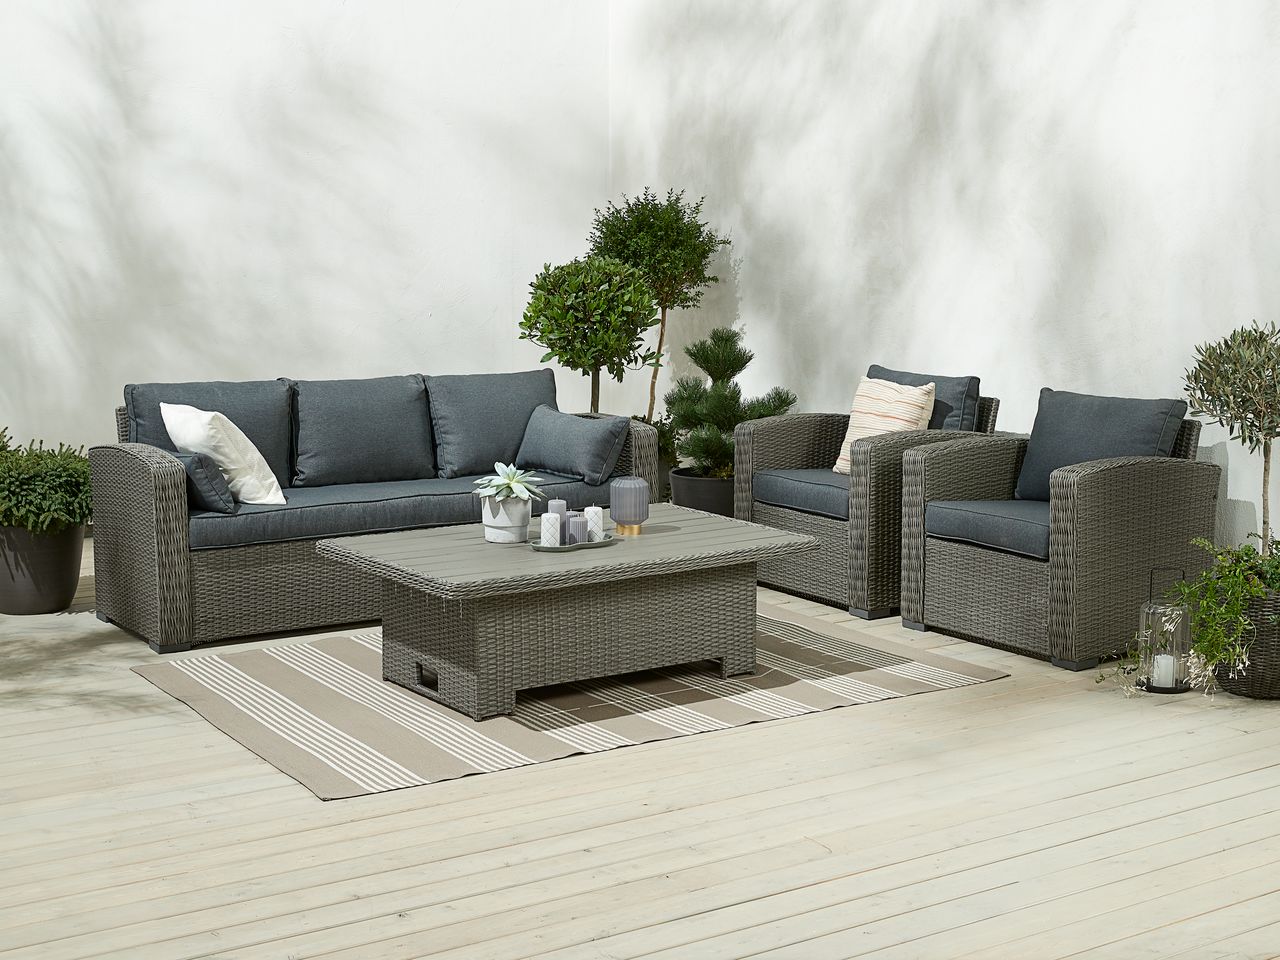 Pico Amargura Considerar Set muebles jardín VEMB 5 plazas gris | JYSK